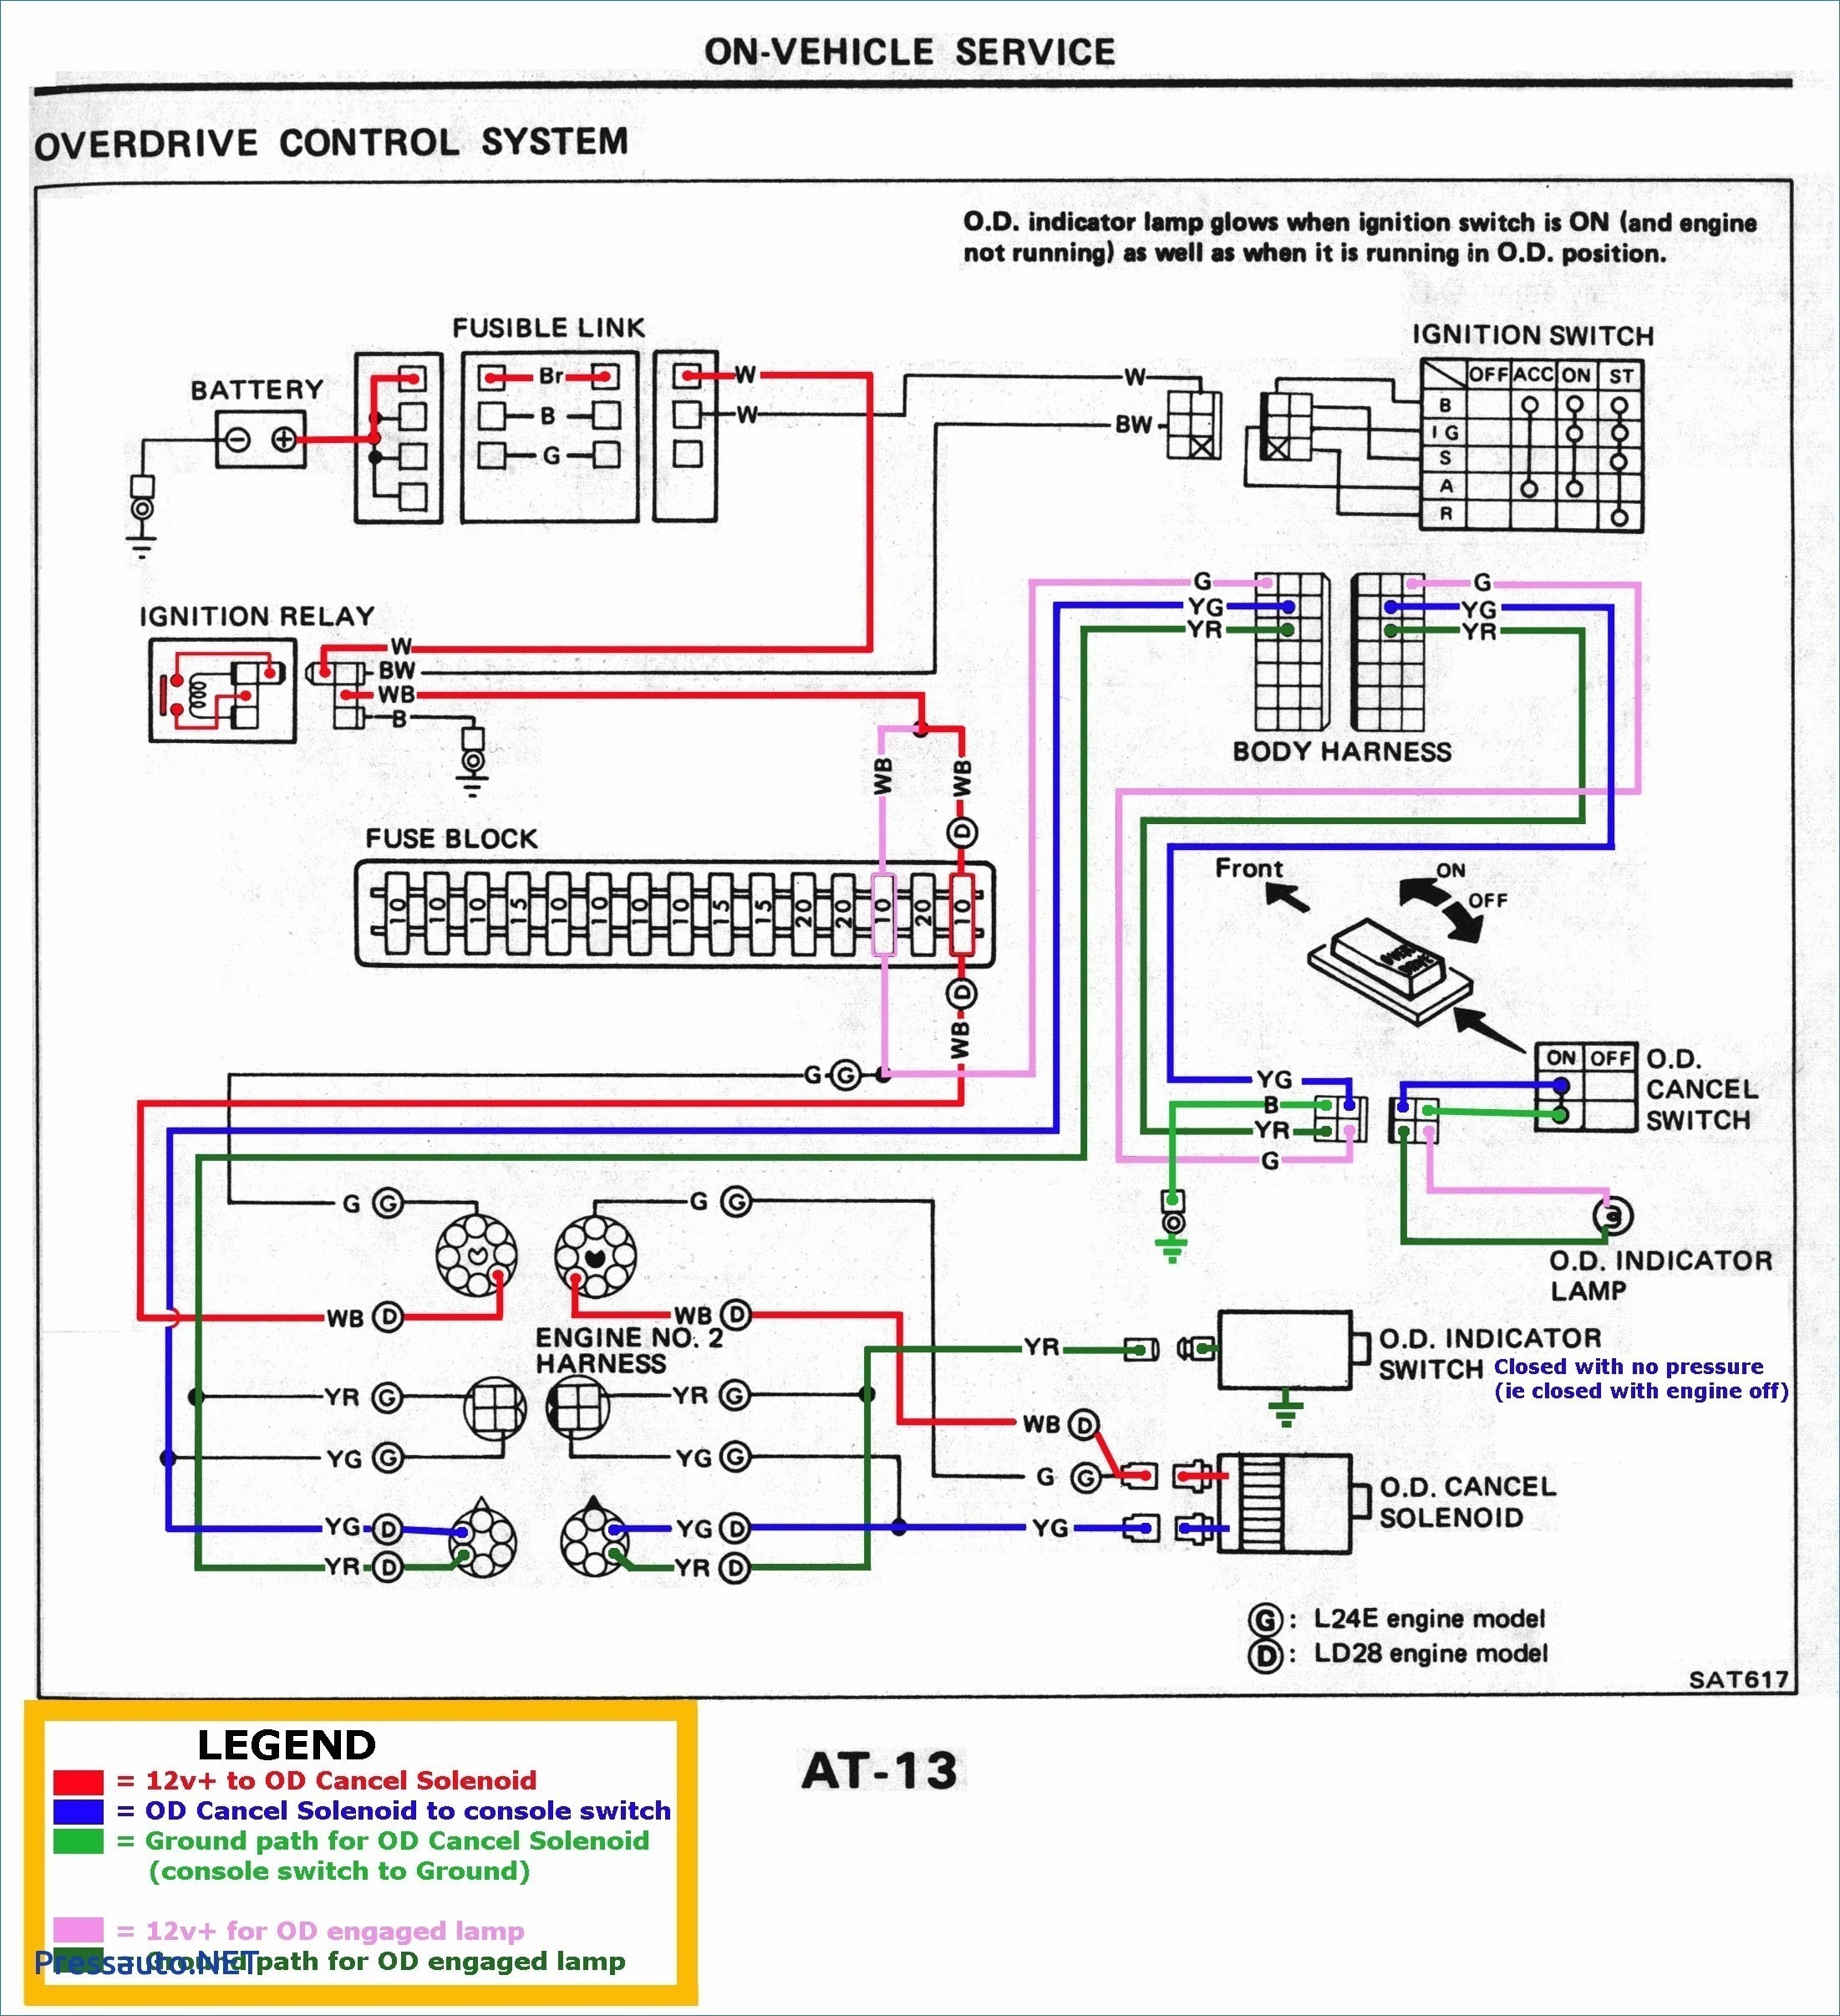 Dimmer Switch To Gfi Wiring Diagram Schematic Diagrams GFI Outlet In Series Gfi Wired In Series Diagram